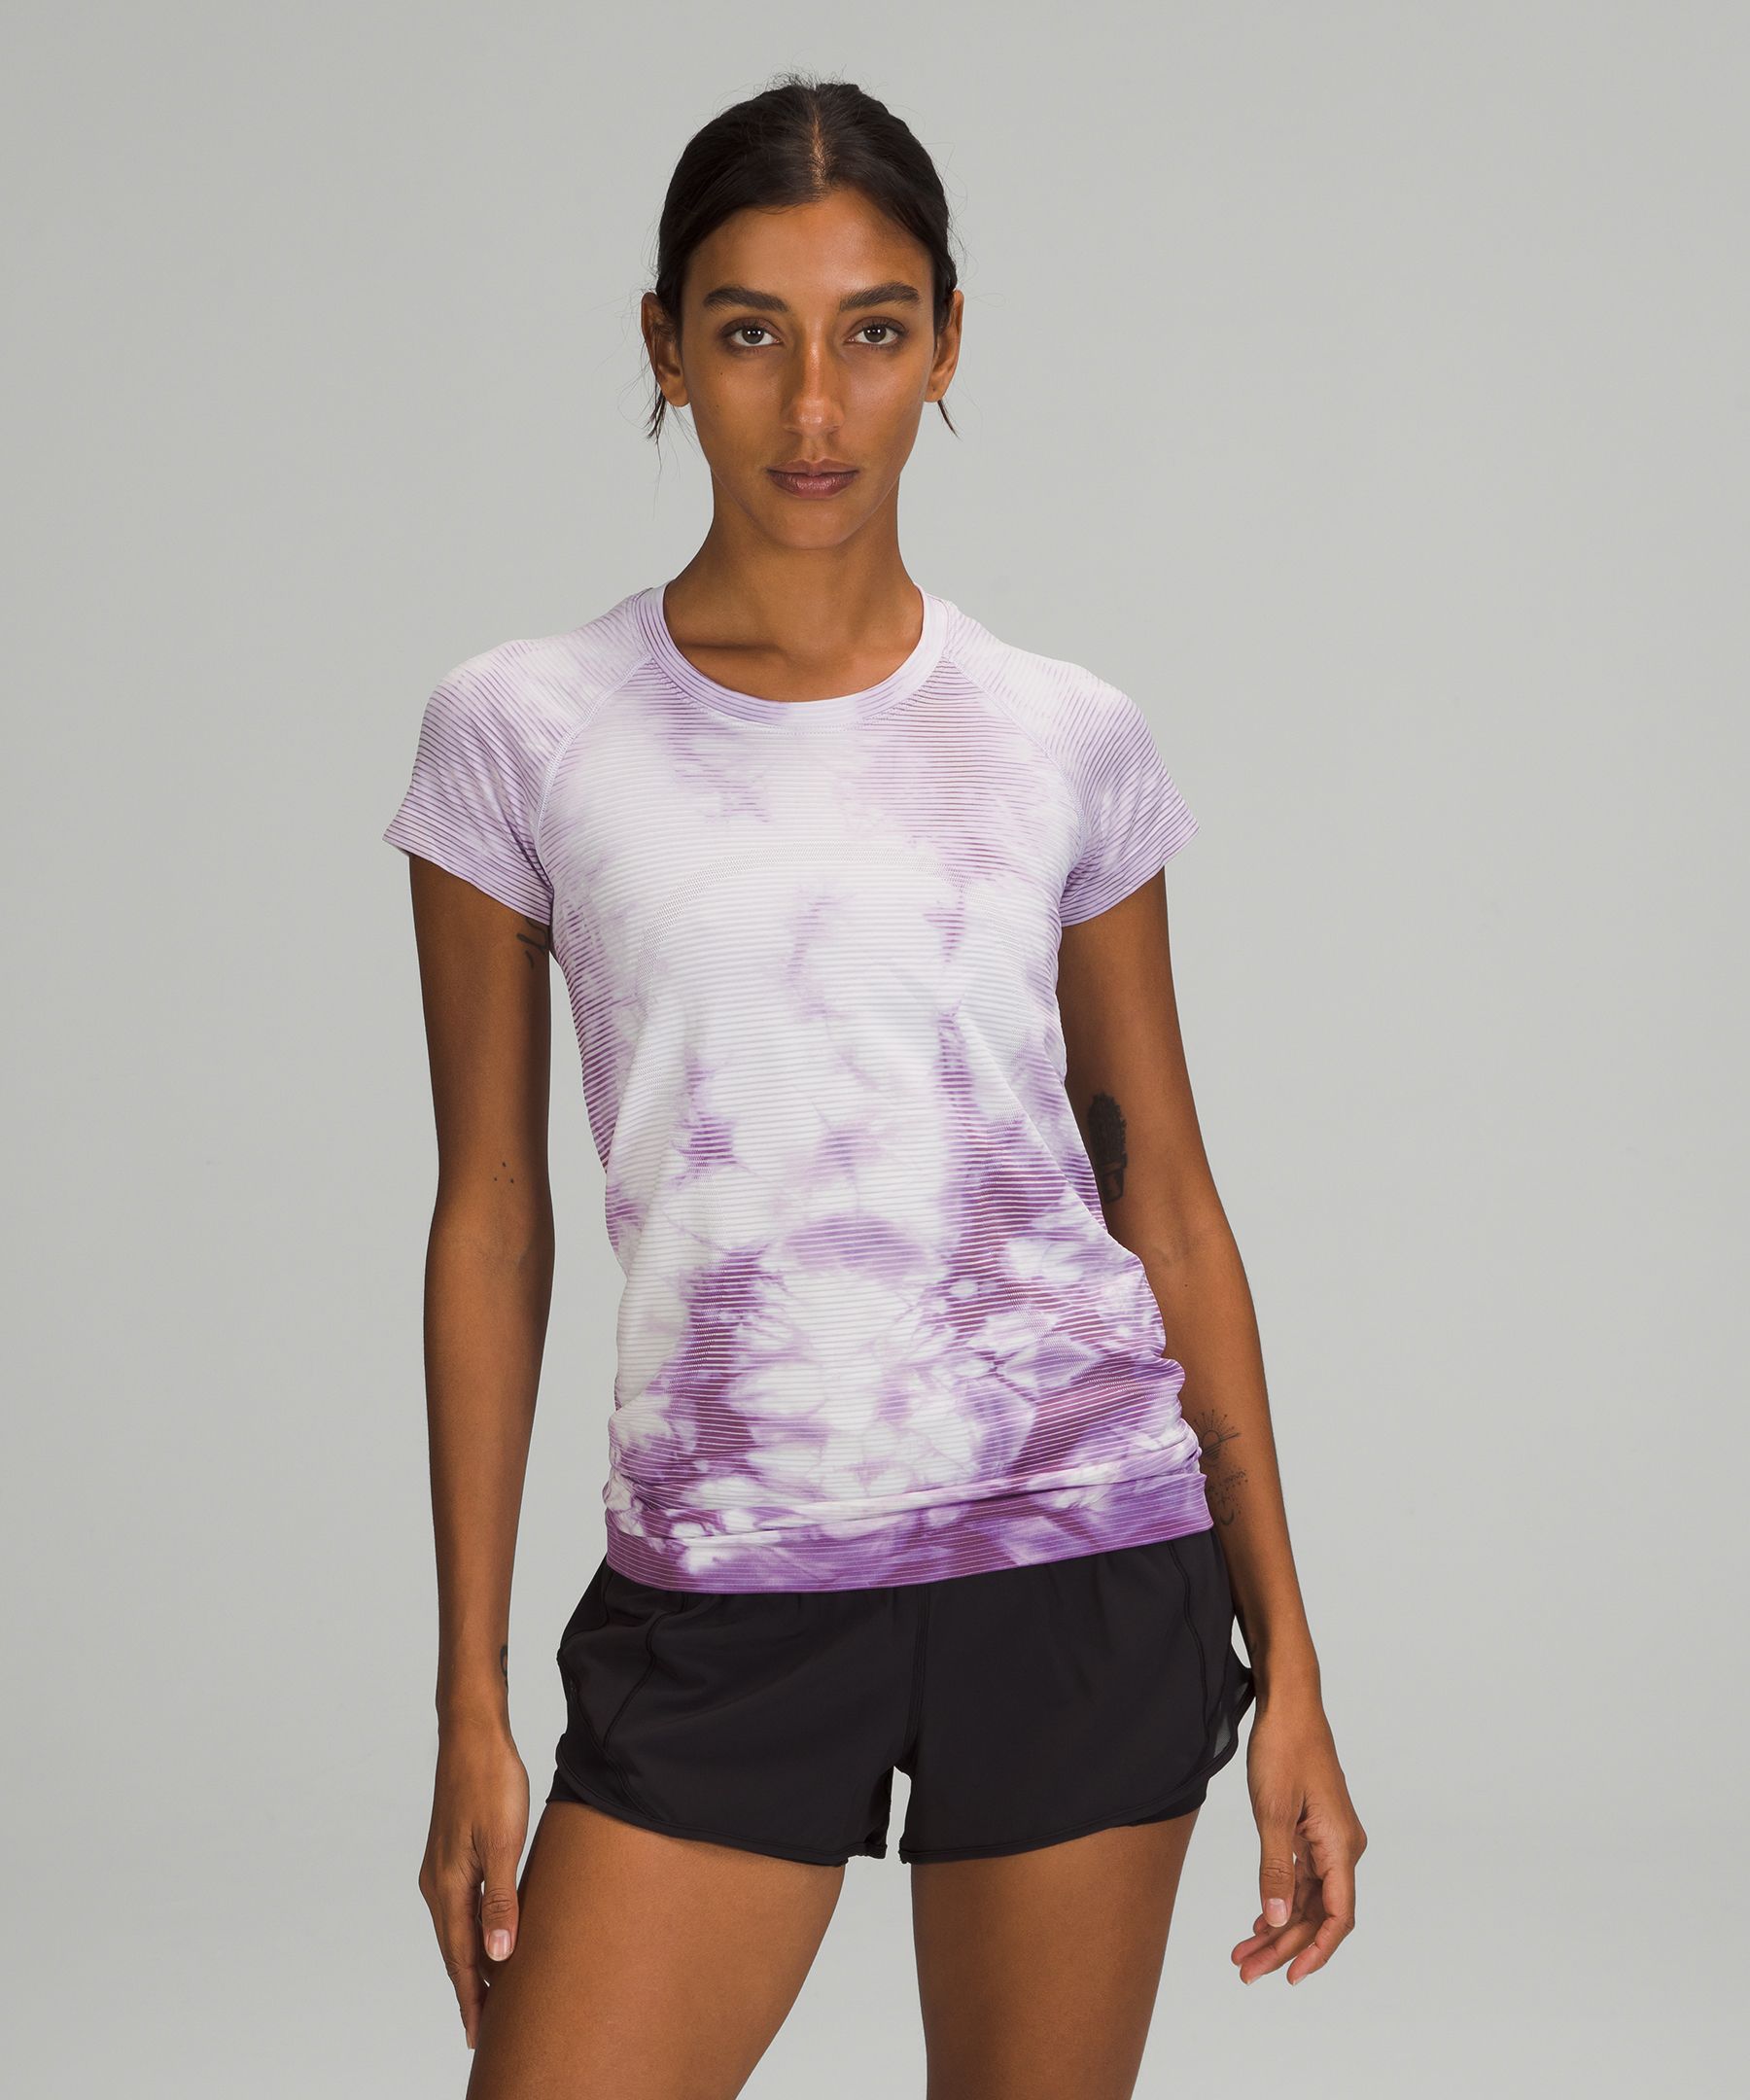 Lululemon Swiftly Tech Short Sleeve Shirt 2.0 In Shibori Stripe Wisteria Purple